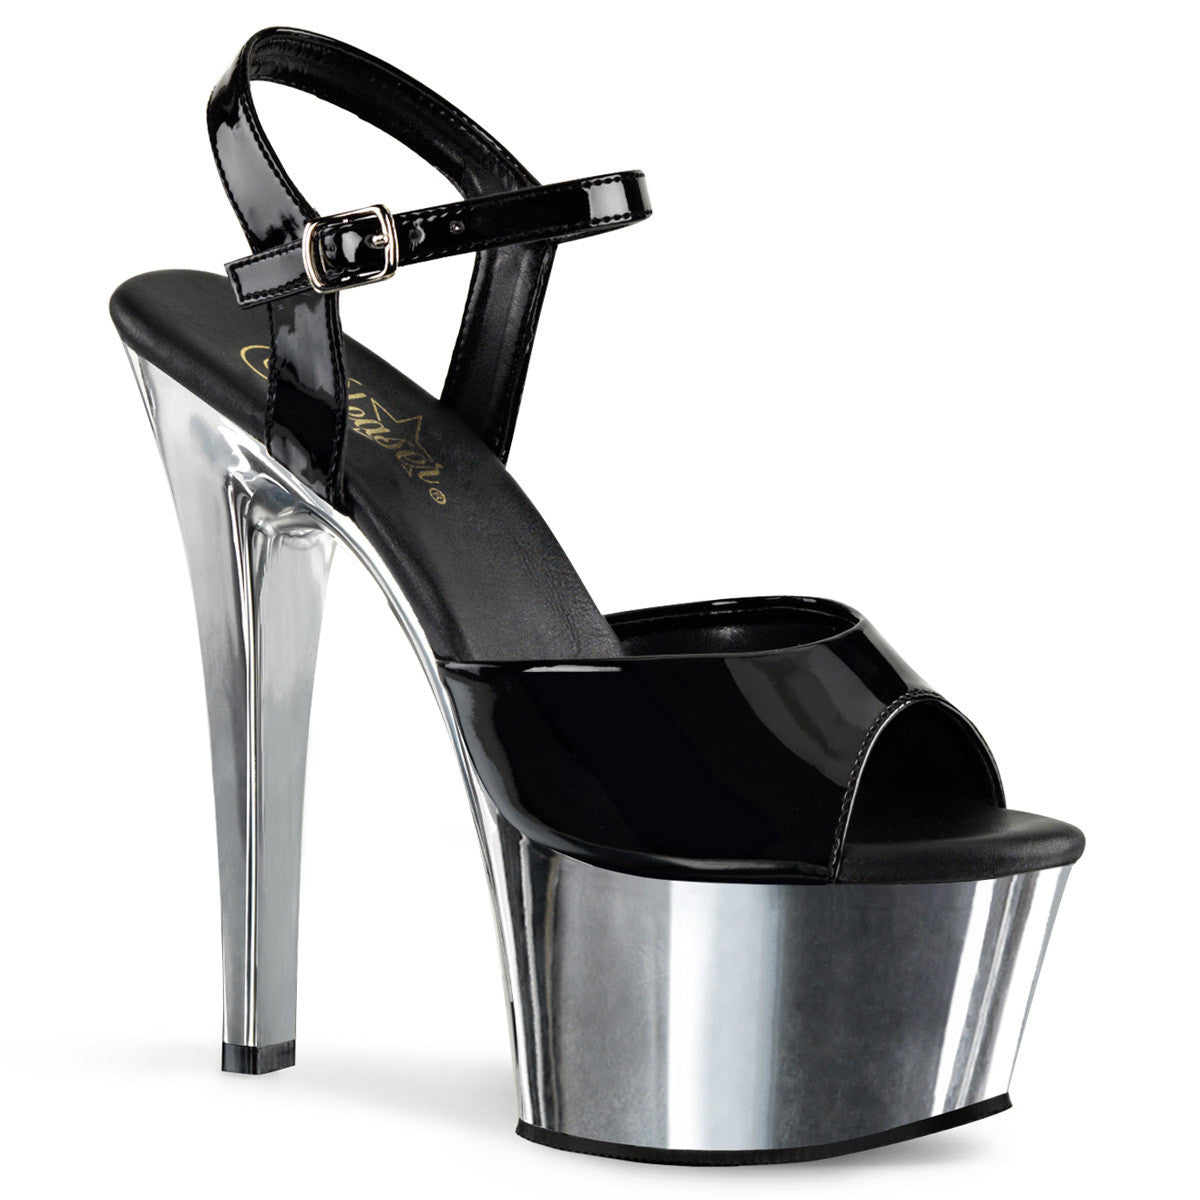 Pleaser ASPIRE-609 Black Ankle Strap Sandals With Silver Chrome Platform - Shoecup.com - 1